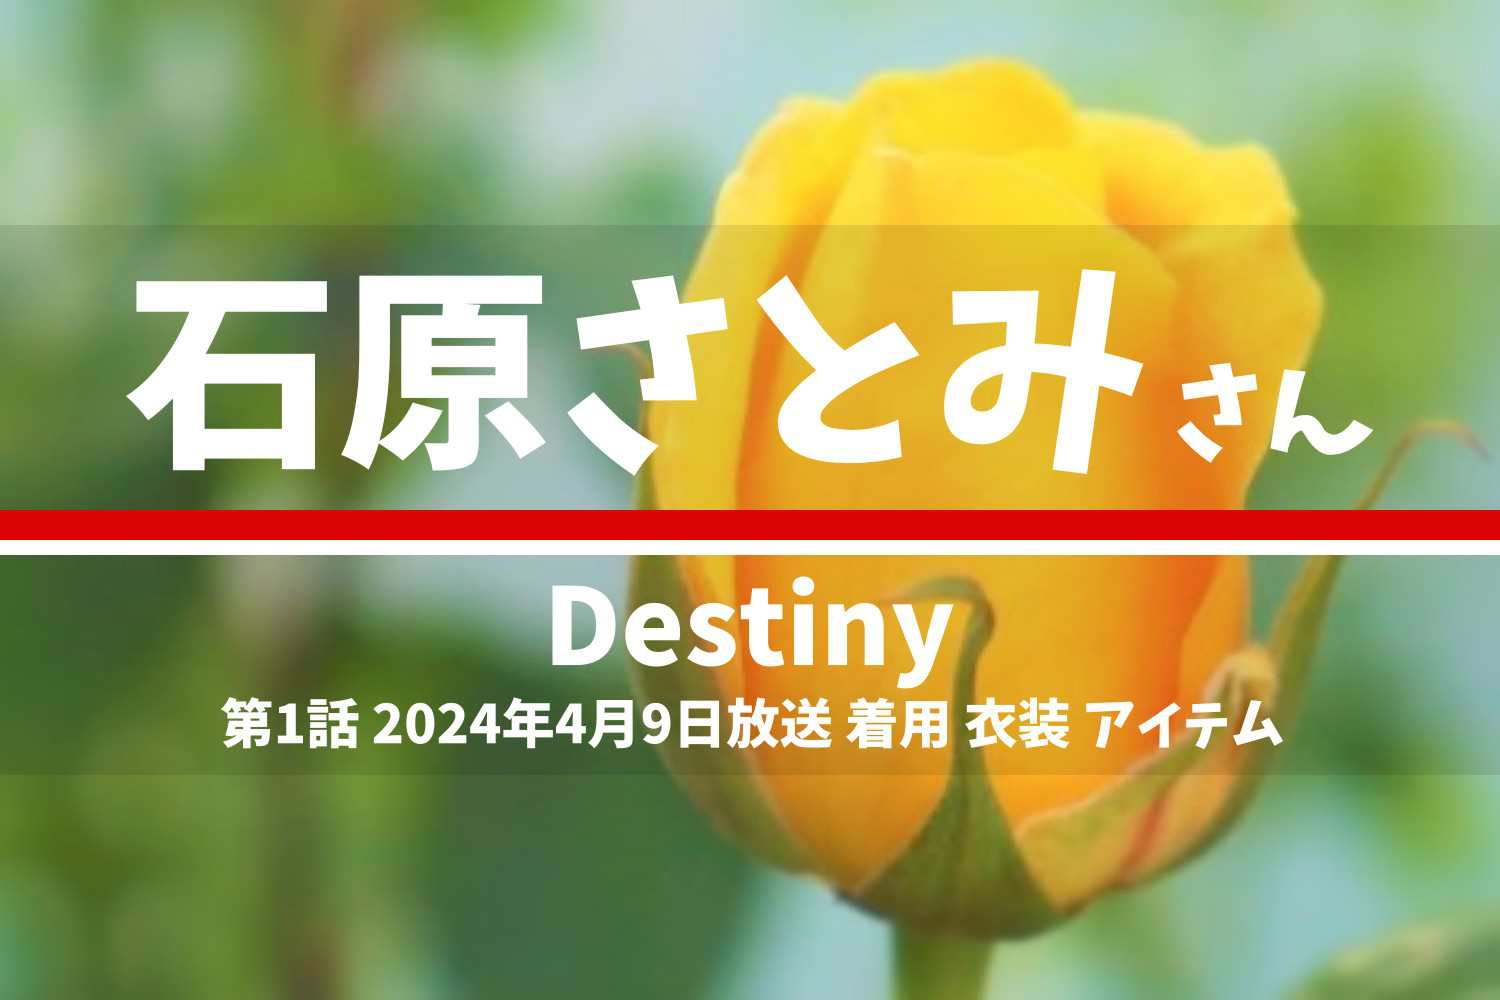 Destiny 石原さとみさん テレビドラマ 衣装 2024年4月9日放送